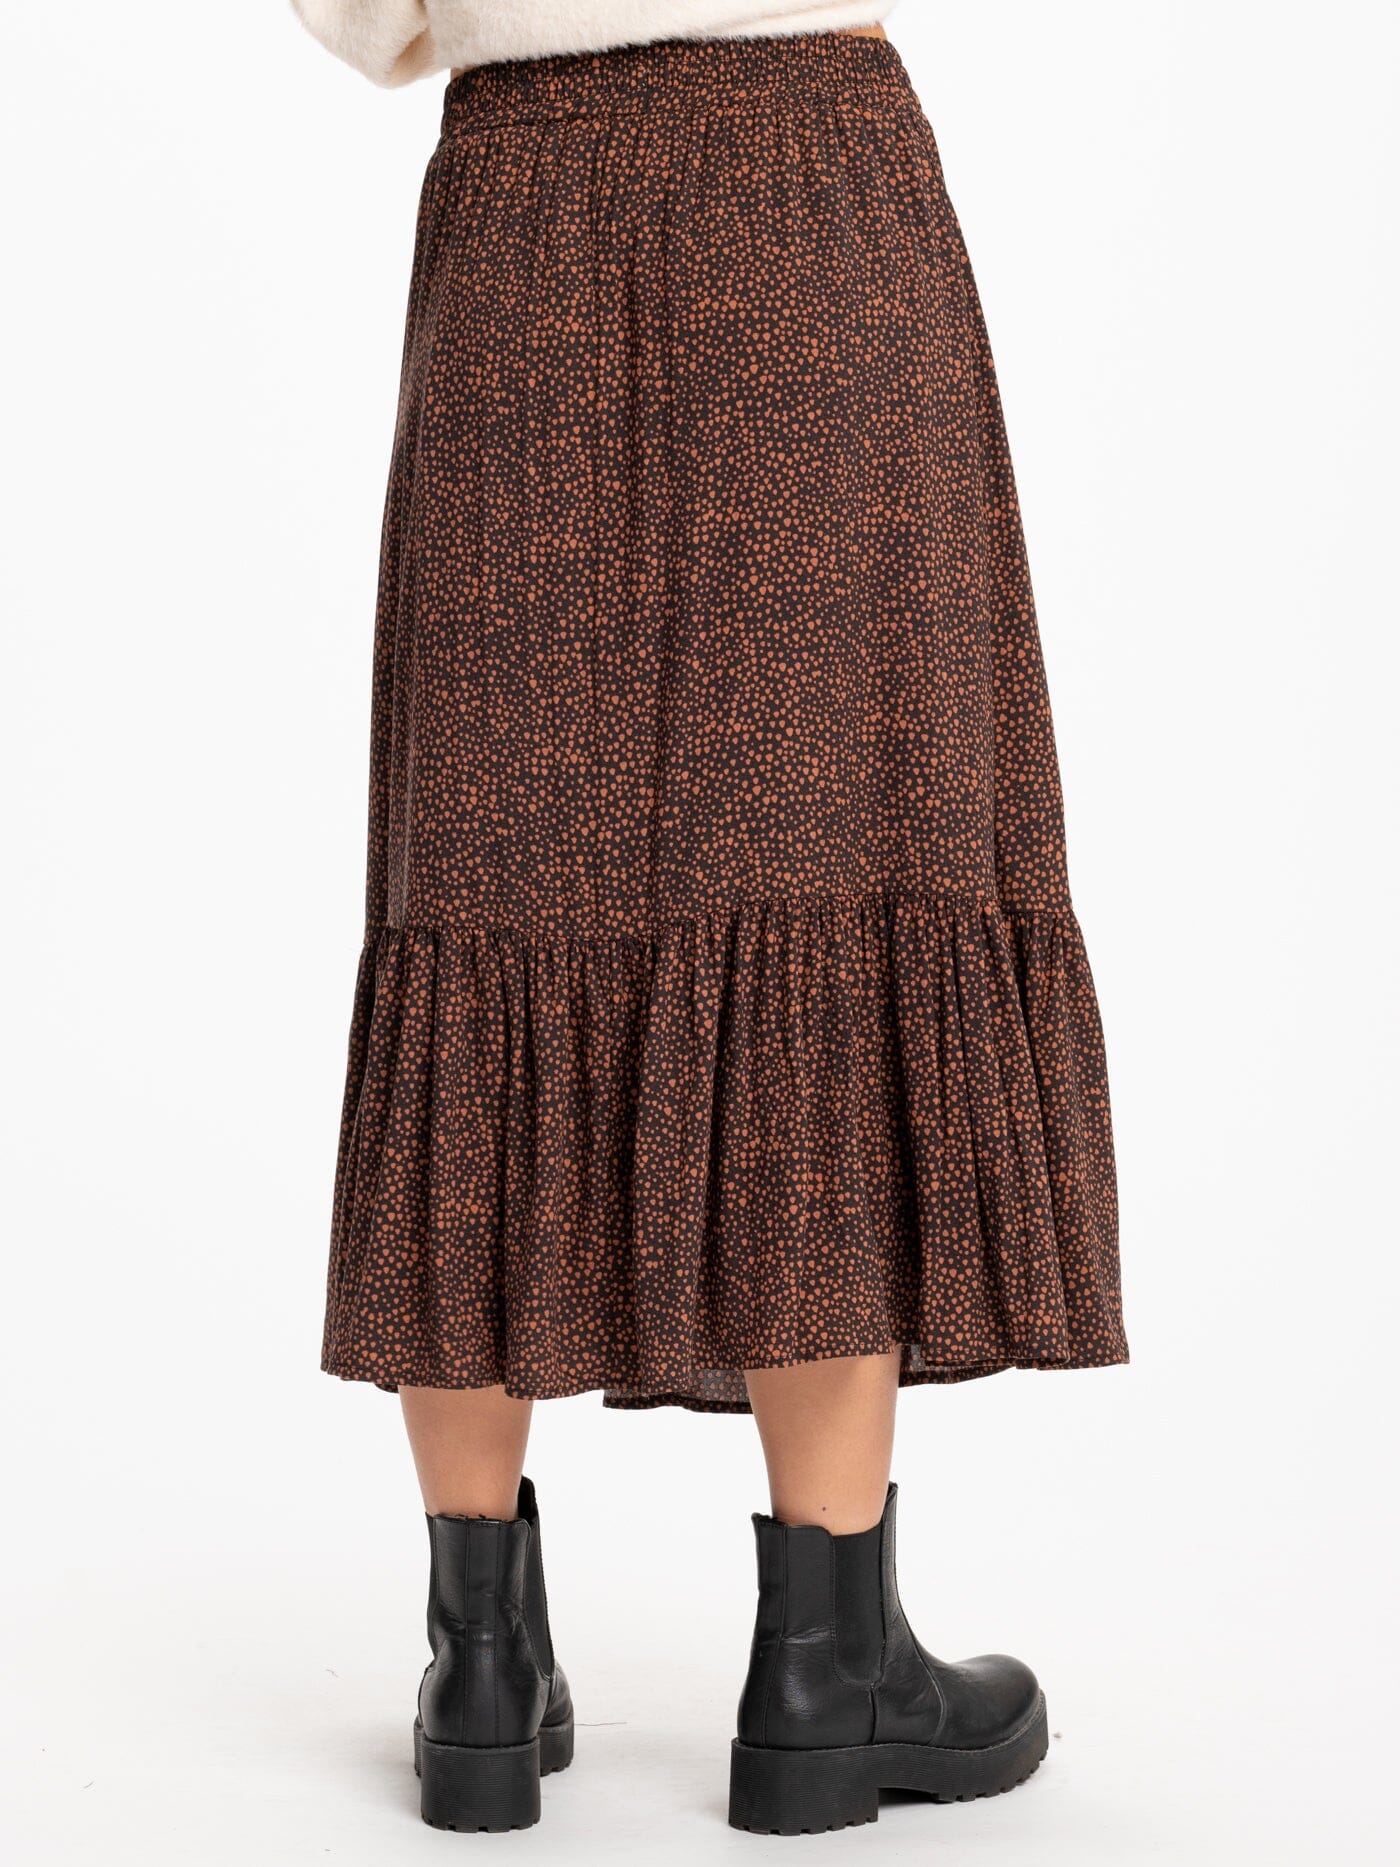 Pomona Tencel Printed Woven Skirt Womens Bottoms Skirt Threads 4 Thought 